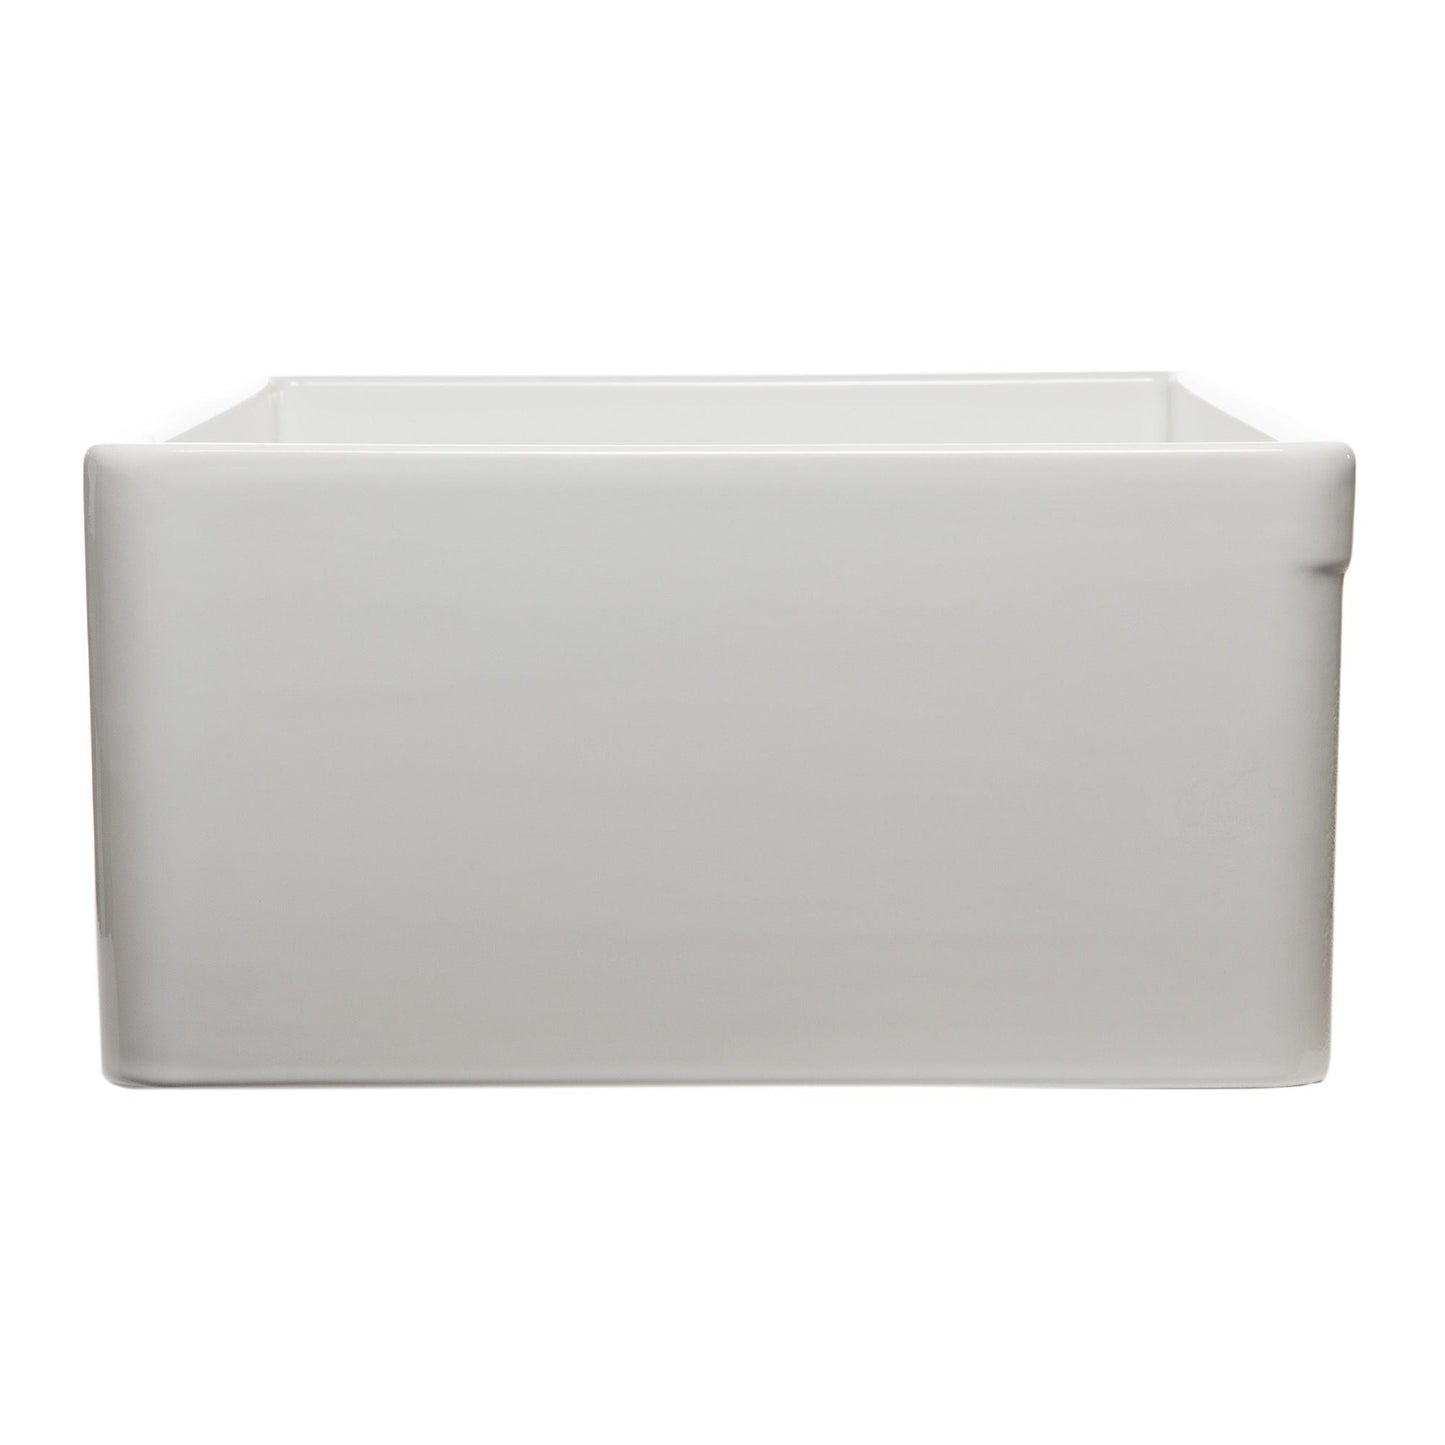 ALFI Brand AB533-W 33" White Smooth Apron Single Bowl Fireclay Farm Sink